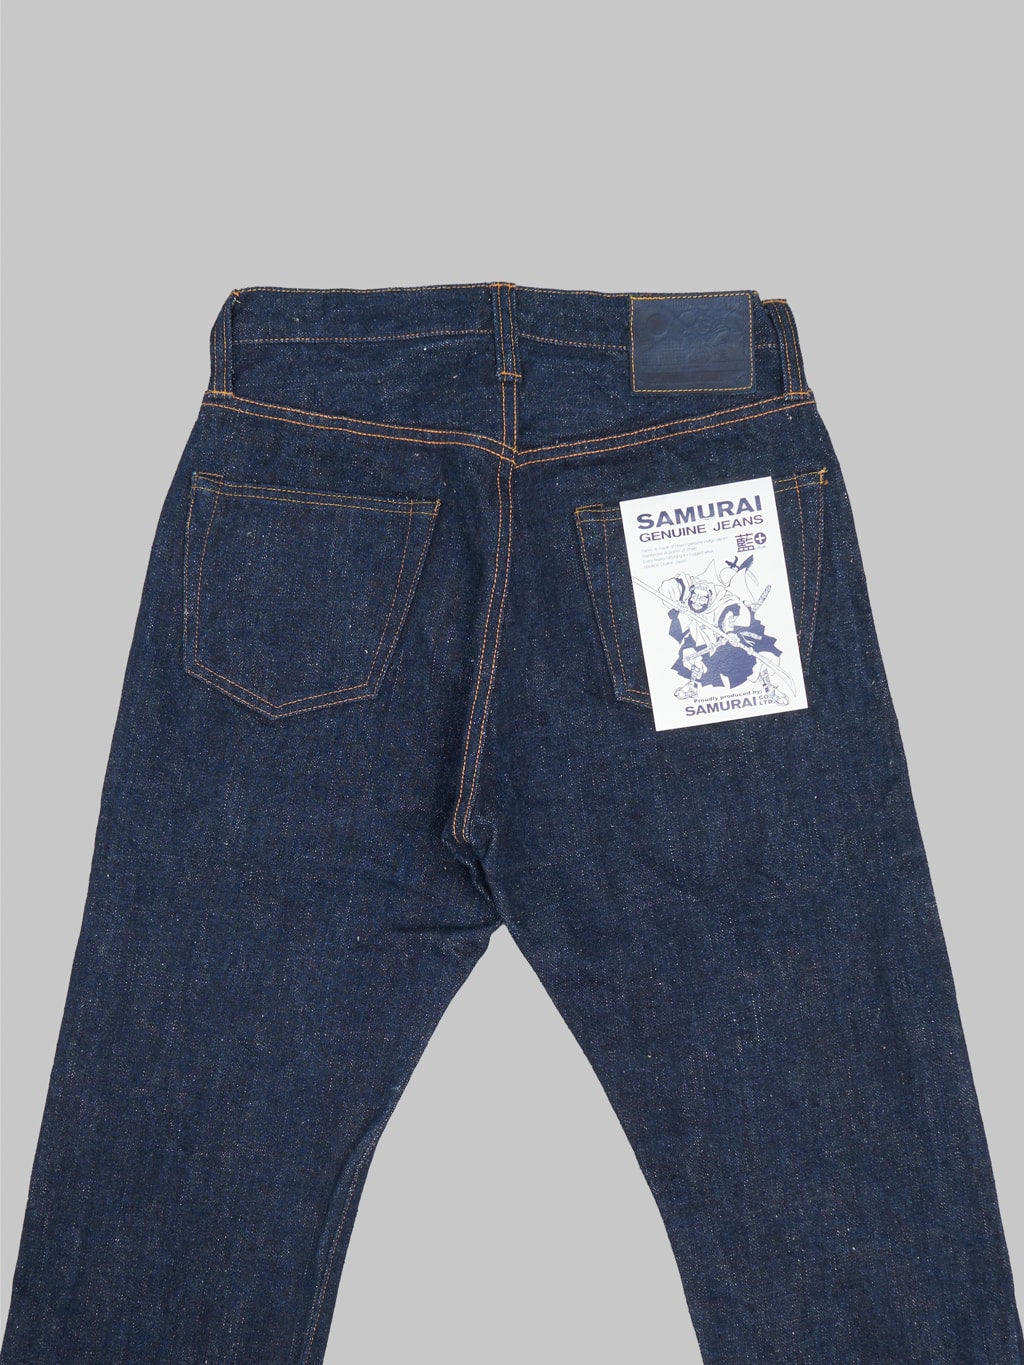 samurai jeans s211ax ai benkei natural indigo 18oz relaxed tapered jeans pockets